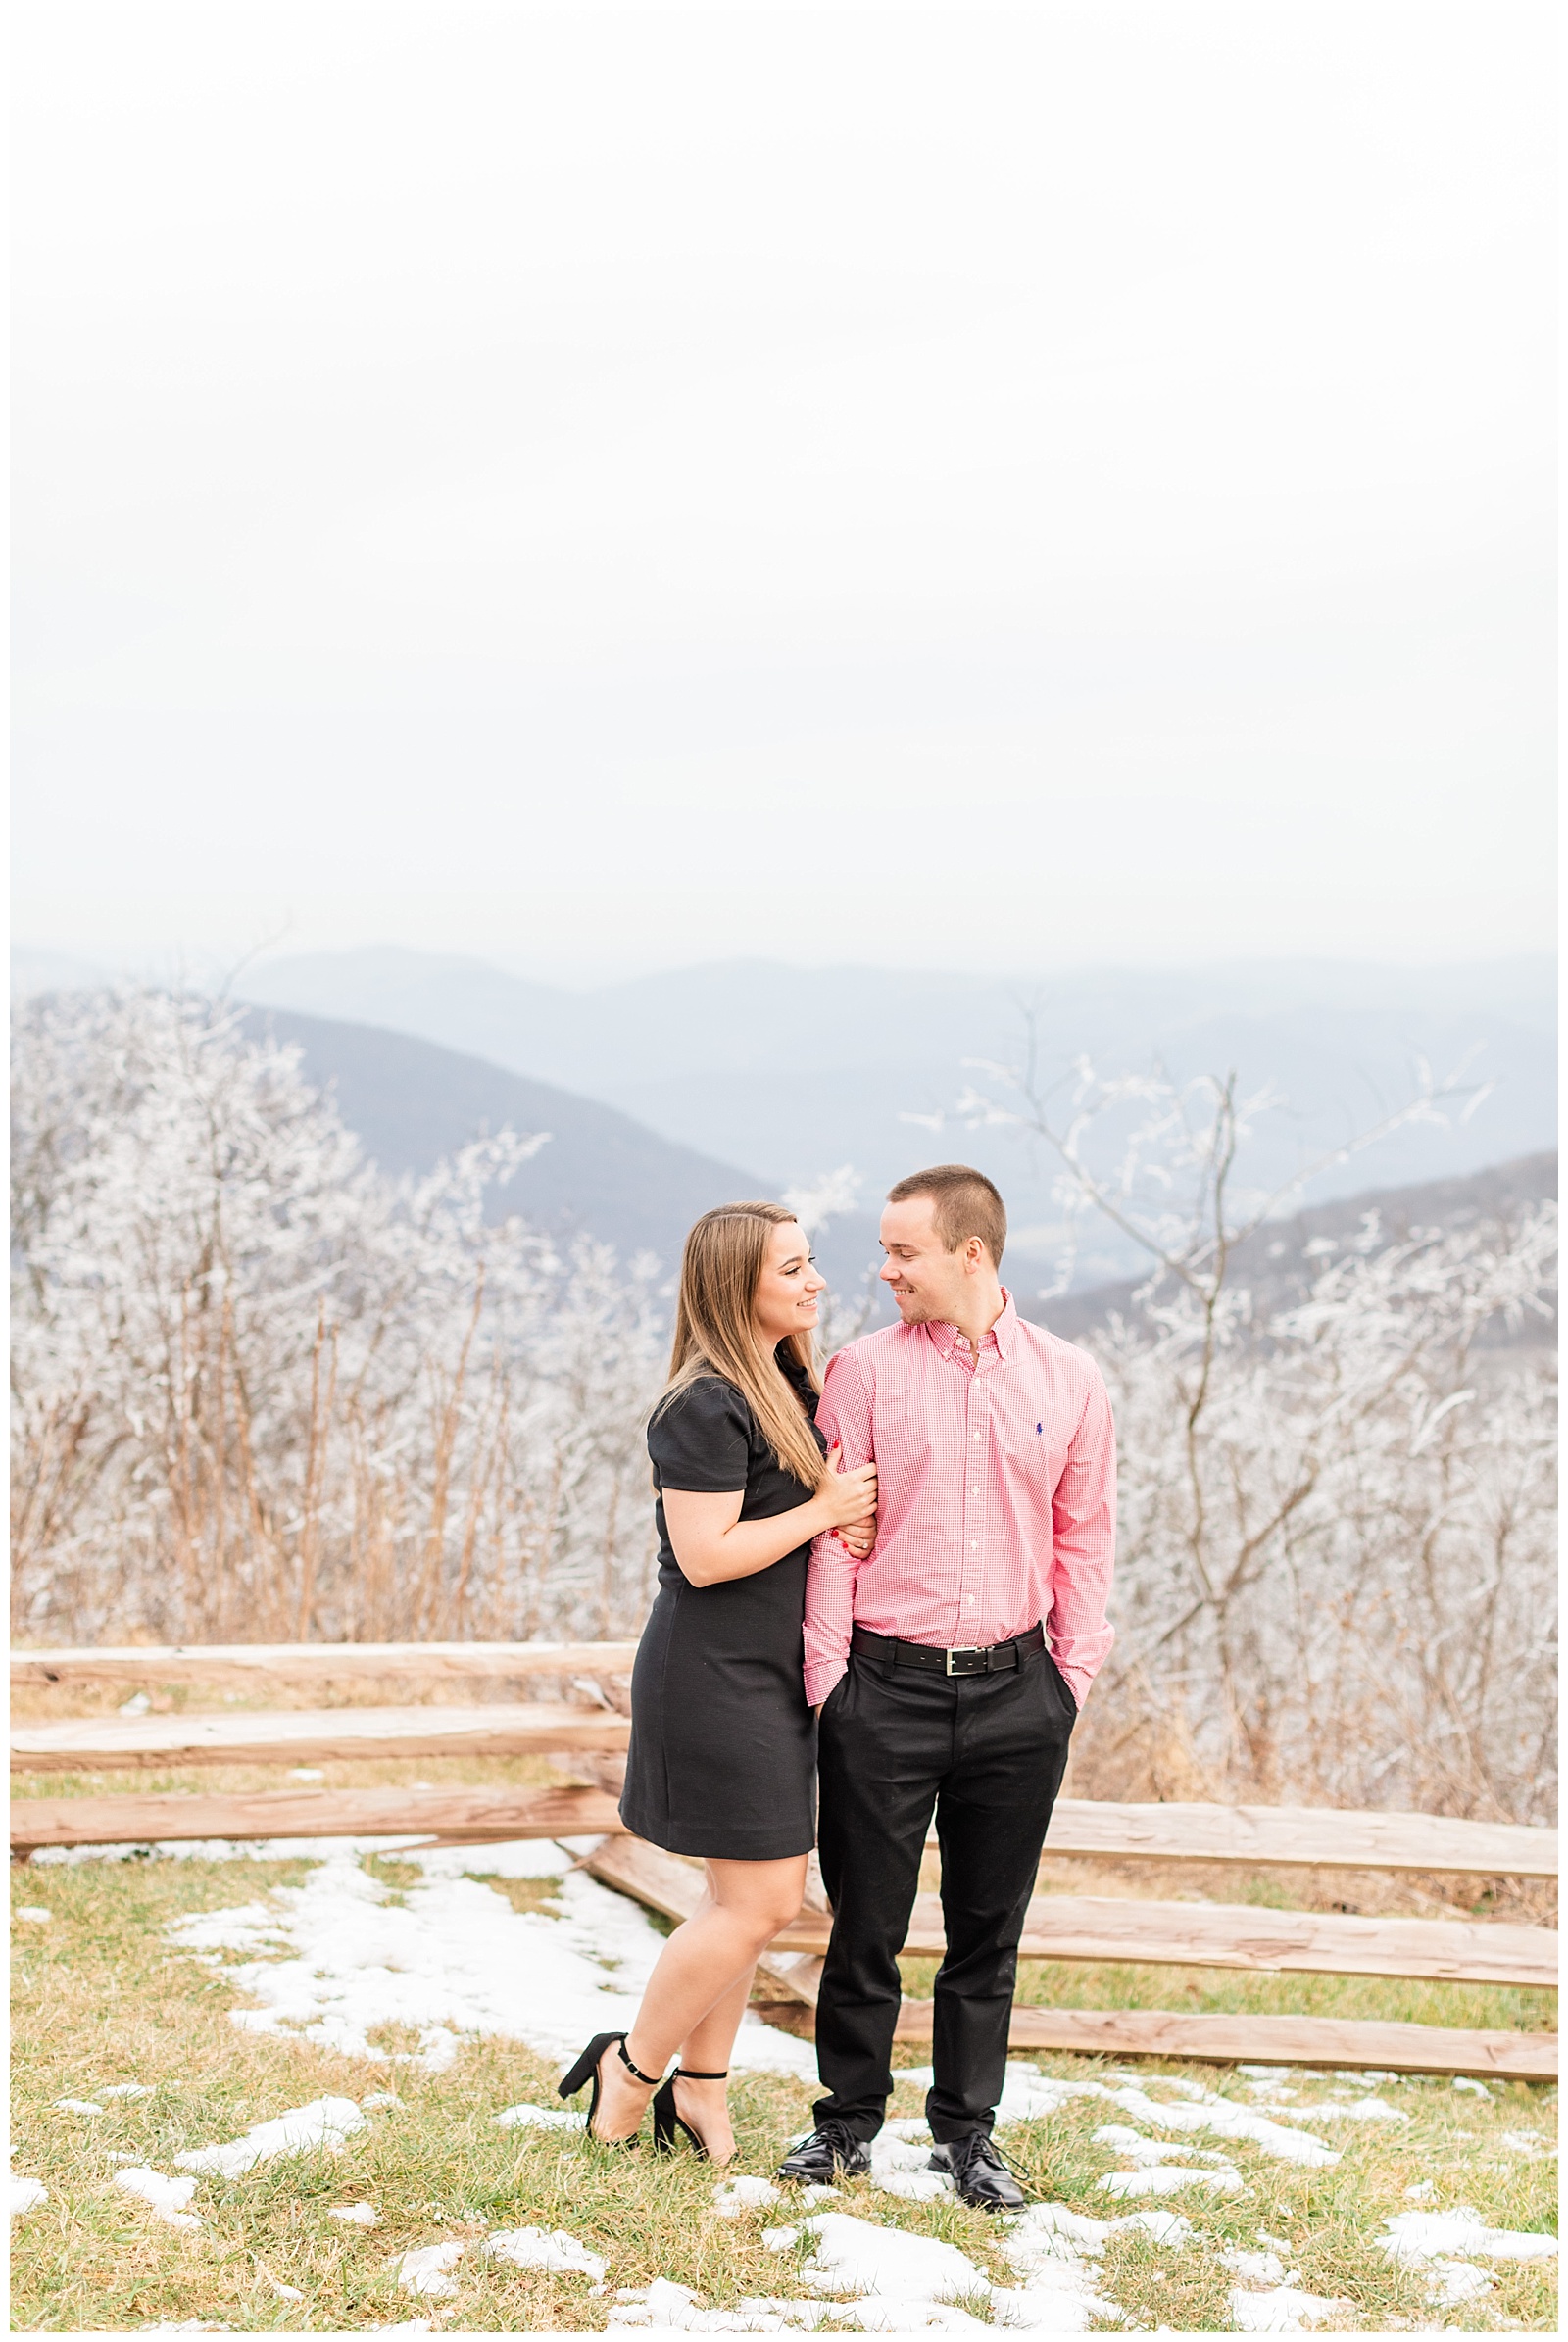 A Snowy Wintergreen Proposal | Sean and Lindsey | Virginia Wedding Photographer24.jpg